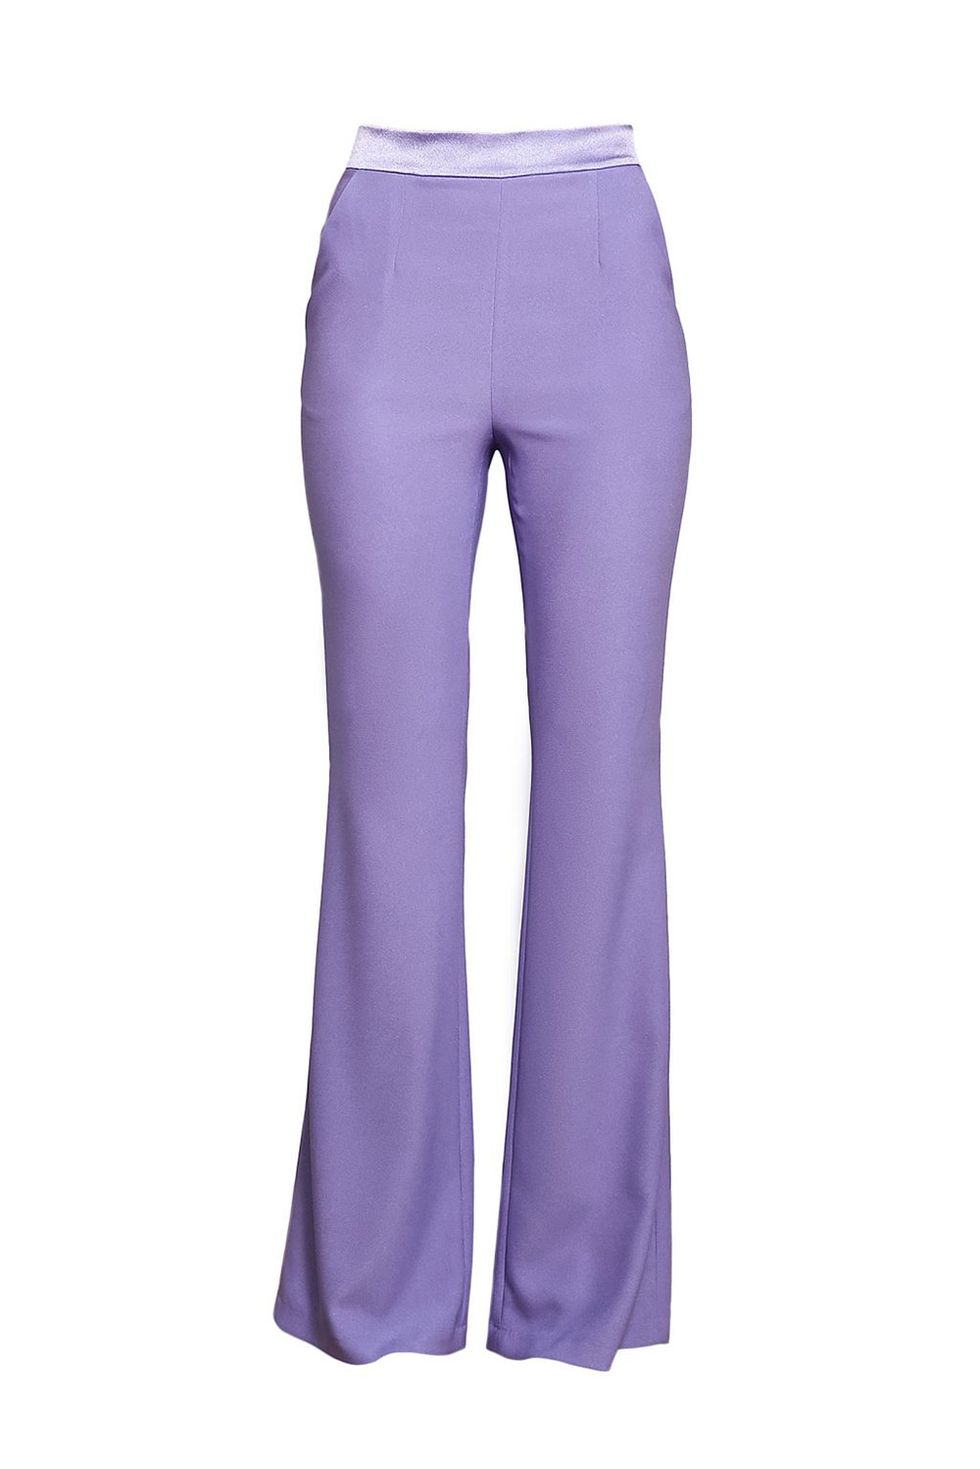 Clothing, Purple, Violet, Active pants, Sportswear, Trousers, Pocket, Jeans, Electric blue, yoga pant, 